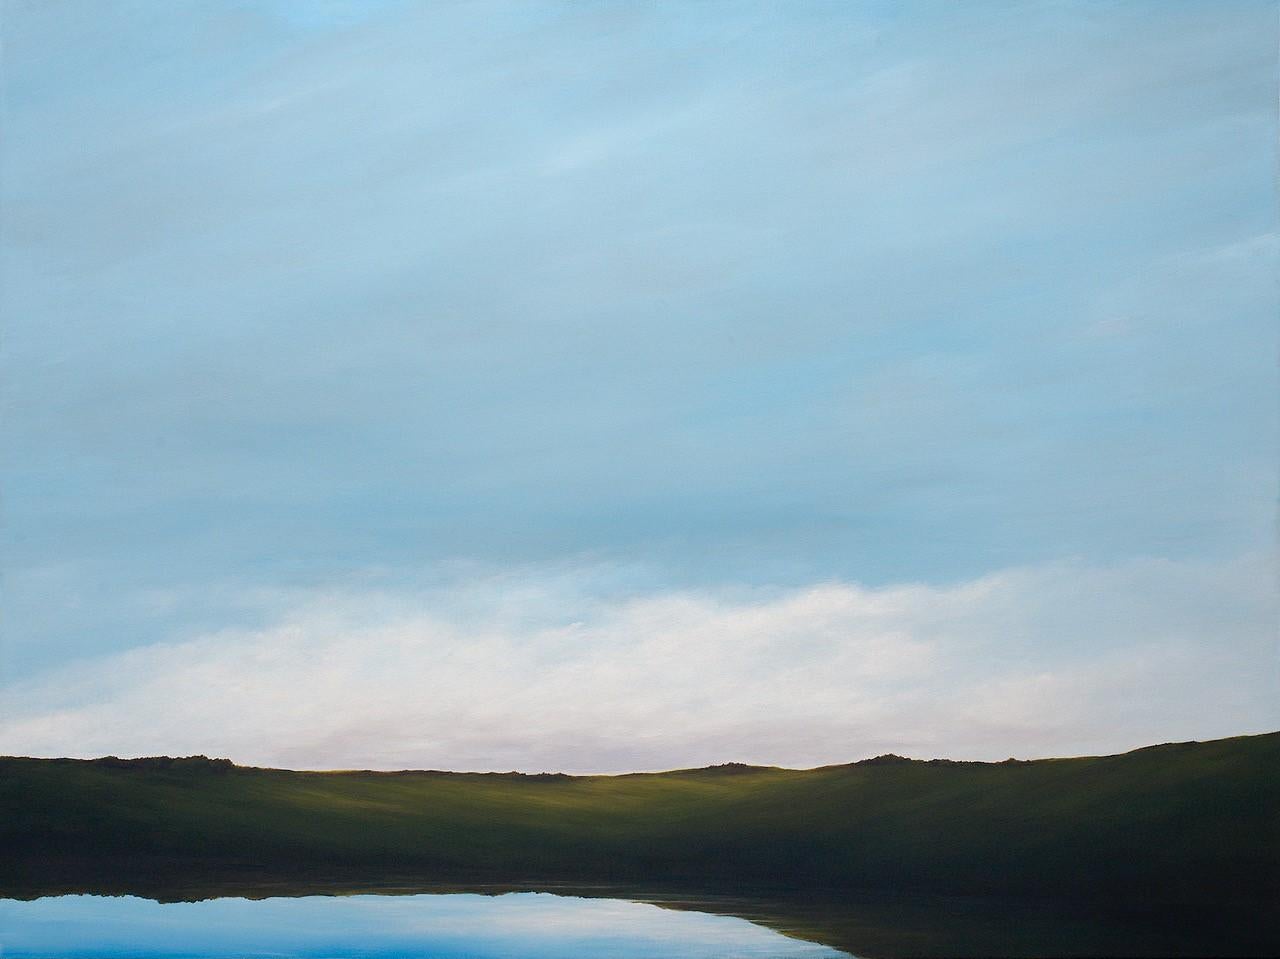 Ahzad Bogosian Landscape Painting - Lagoon - Serene Landscape, Expansive Cloudy Sky with Calm Lake, Original Oil 